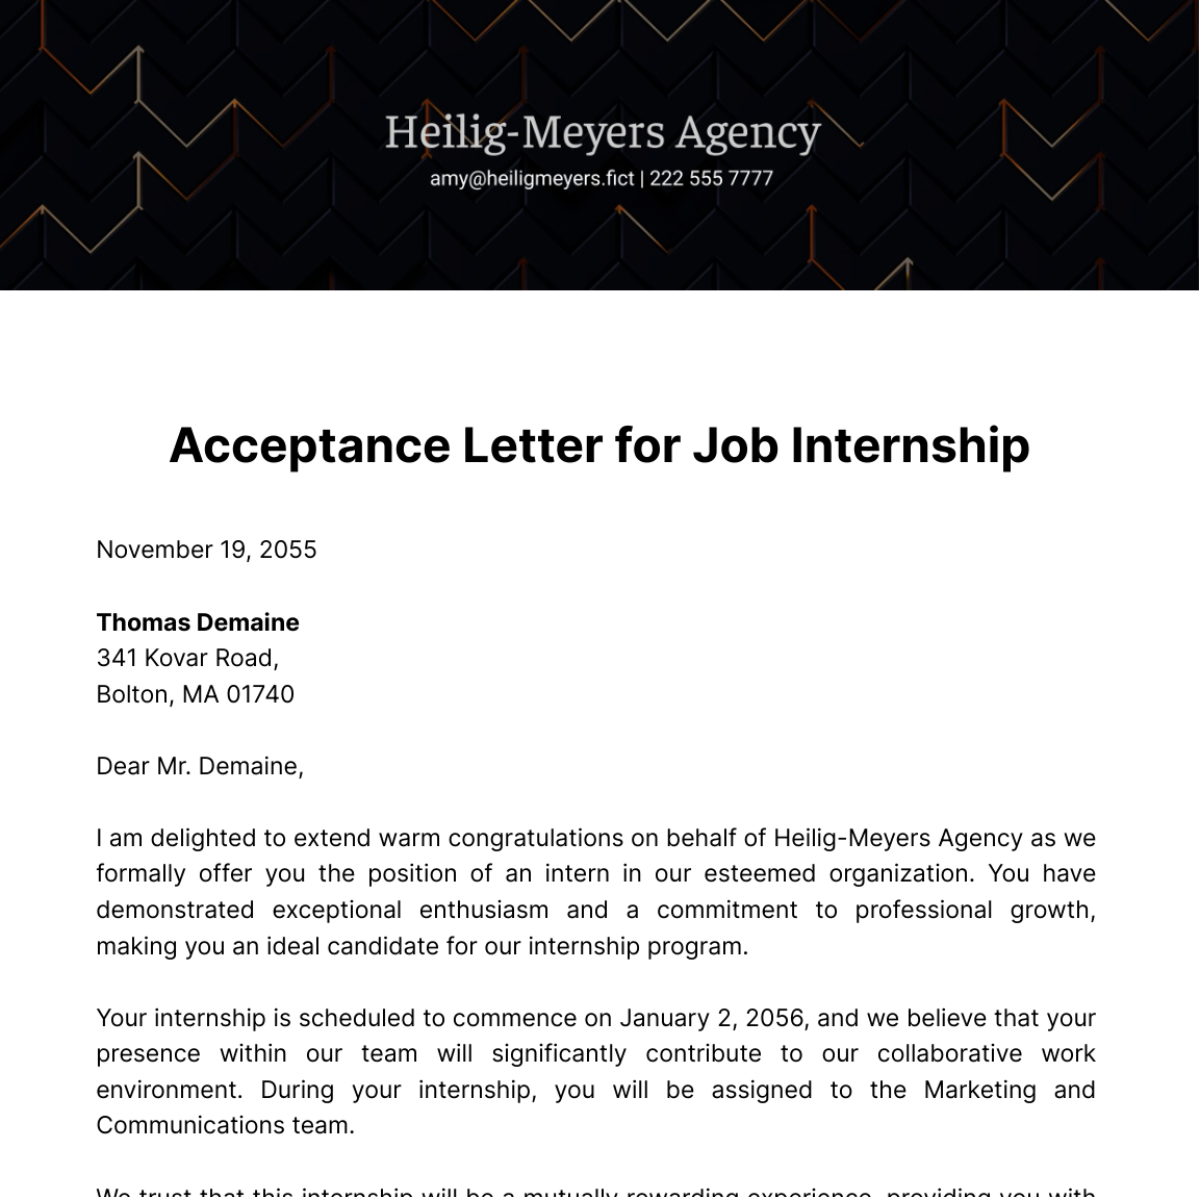 Acceptance Letter for Job Internship Template